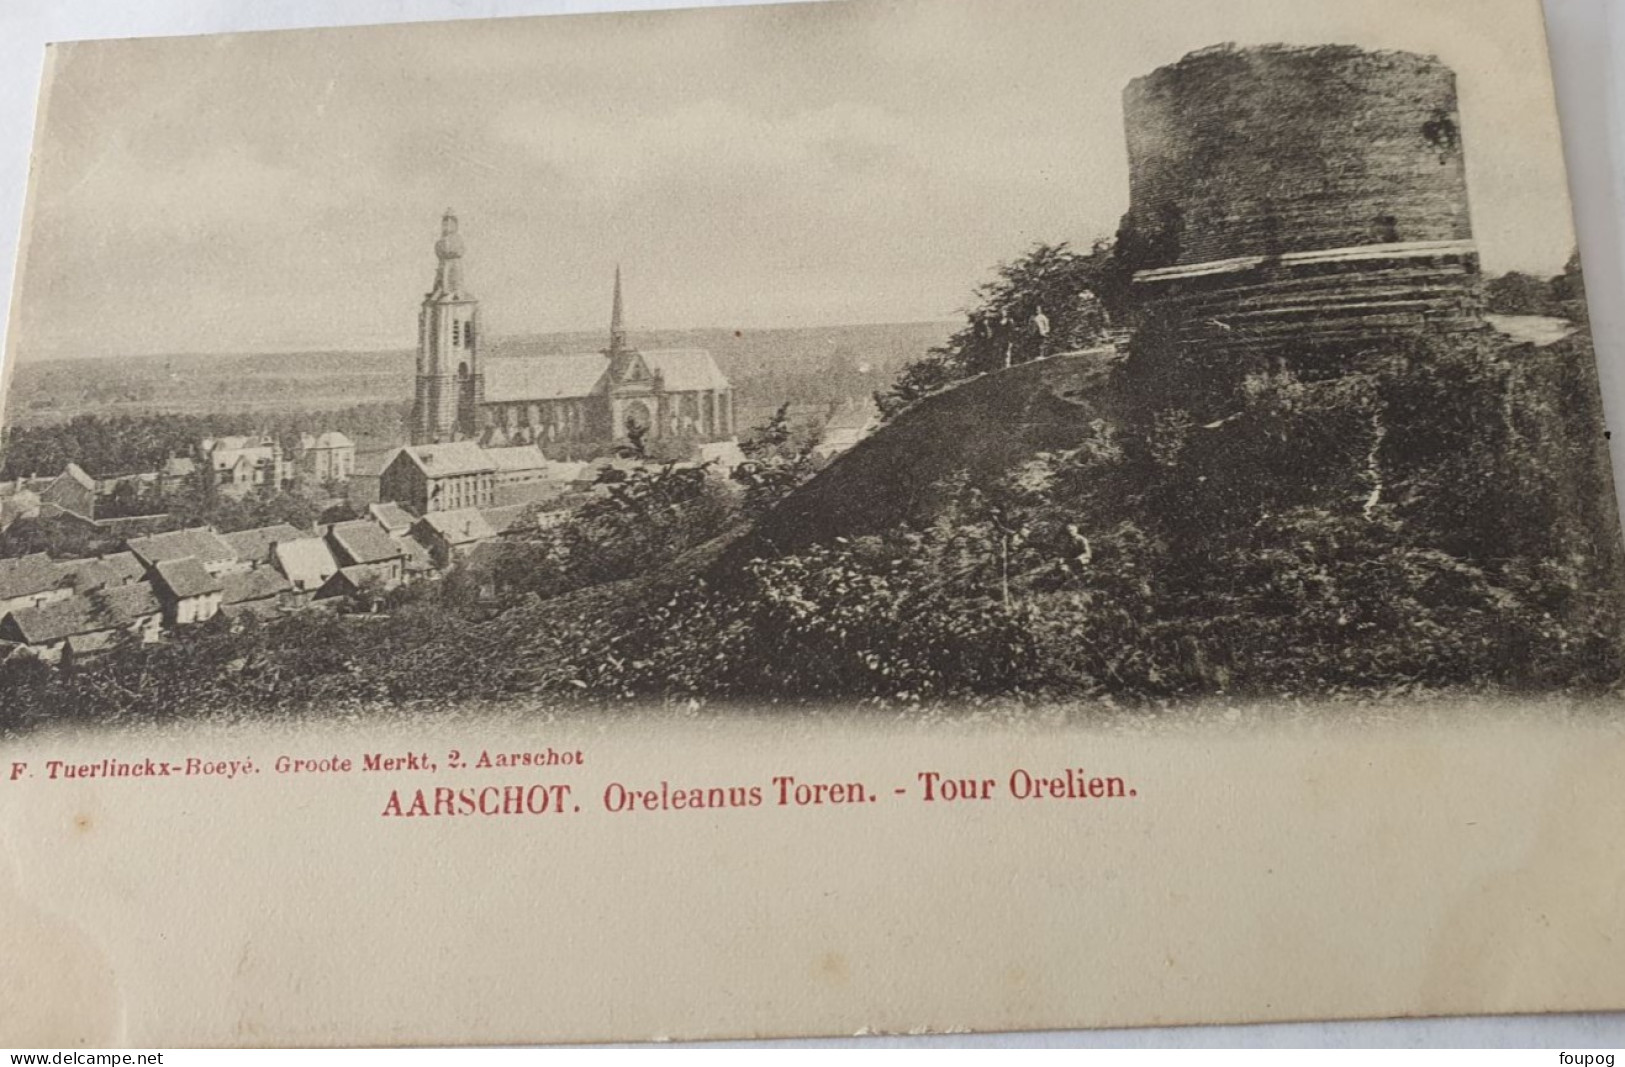 AARSCHOT ORELANUS TOREN TOUR ORELIEN PRECURSEUR DOS NON DIVISE 1902 - Aarschot